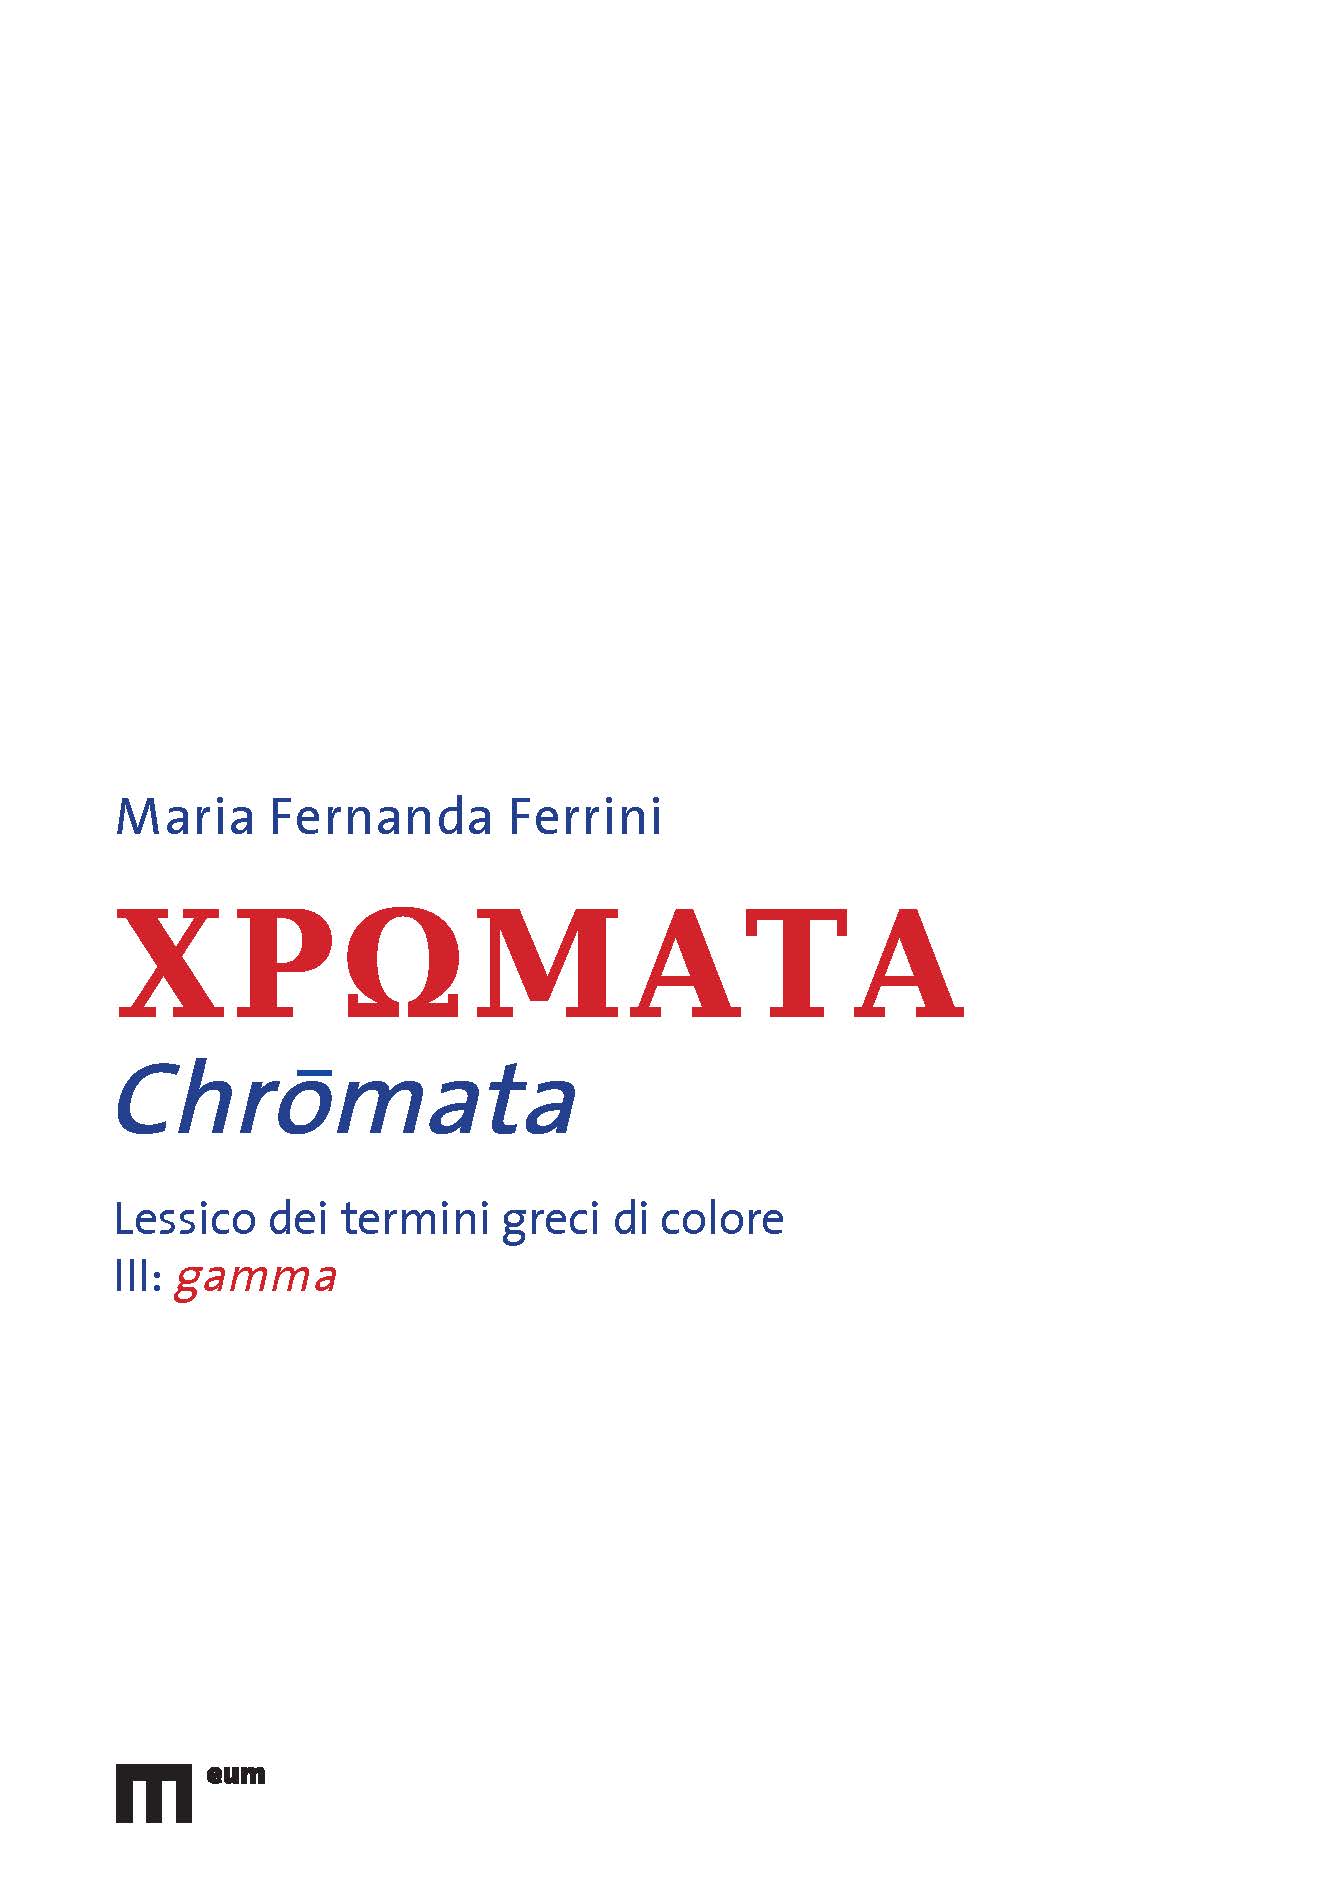 Chrōmata (ΧΡΩΜΑΤΑ) III: gamma